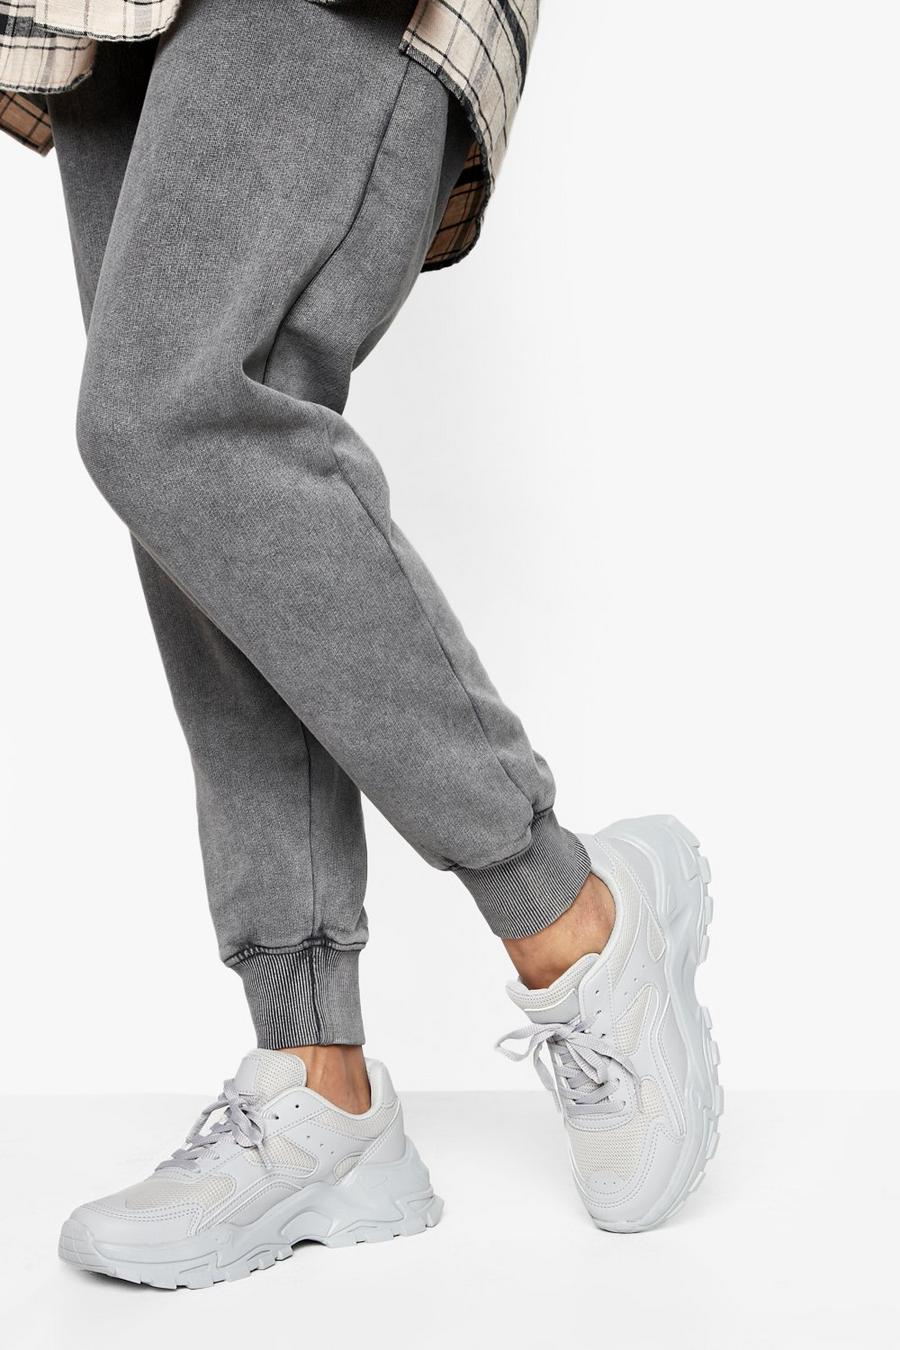 Grey grigio נעלי ספורט עבות עם עיטור רשת בשני צבעים